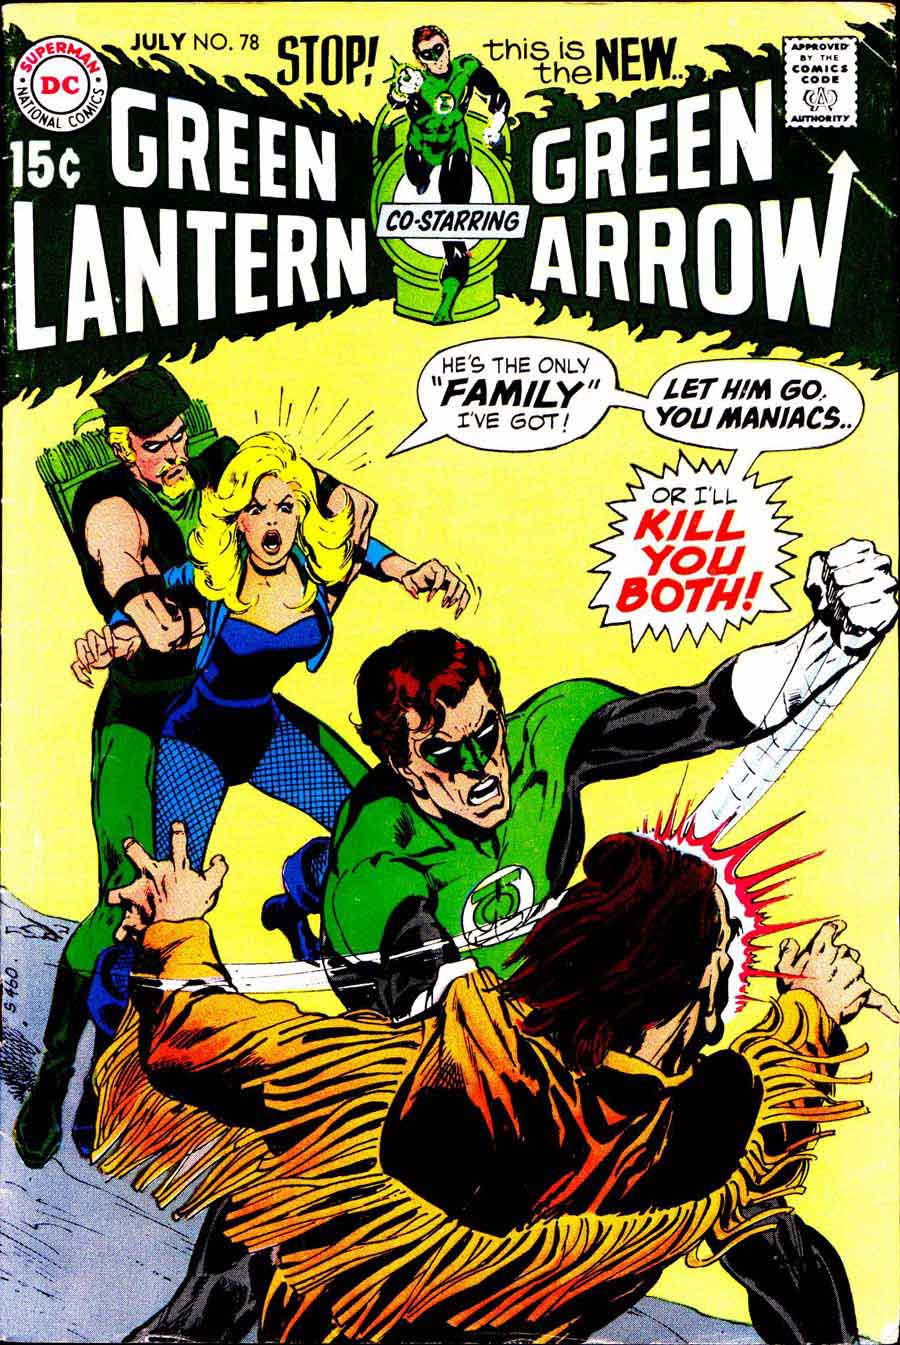 Green Lantern Green Arrow #78 bronze age 1970s dc comic book cover art by Neal Adams